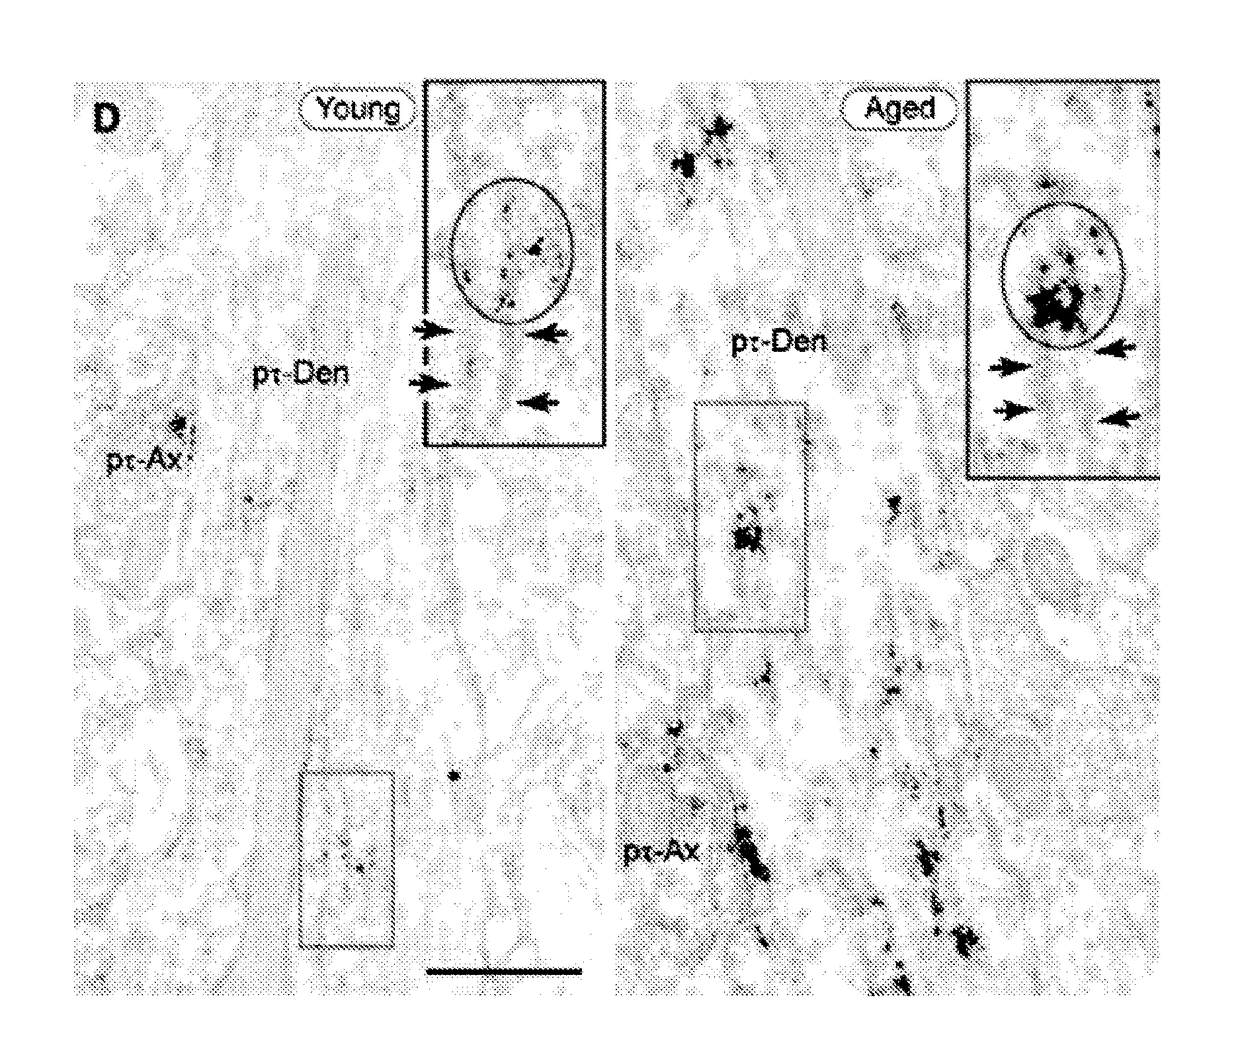 Methods of preventing neurodegeneration of association cortex in a mammal